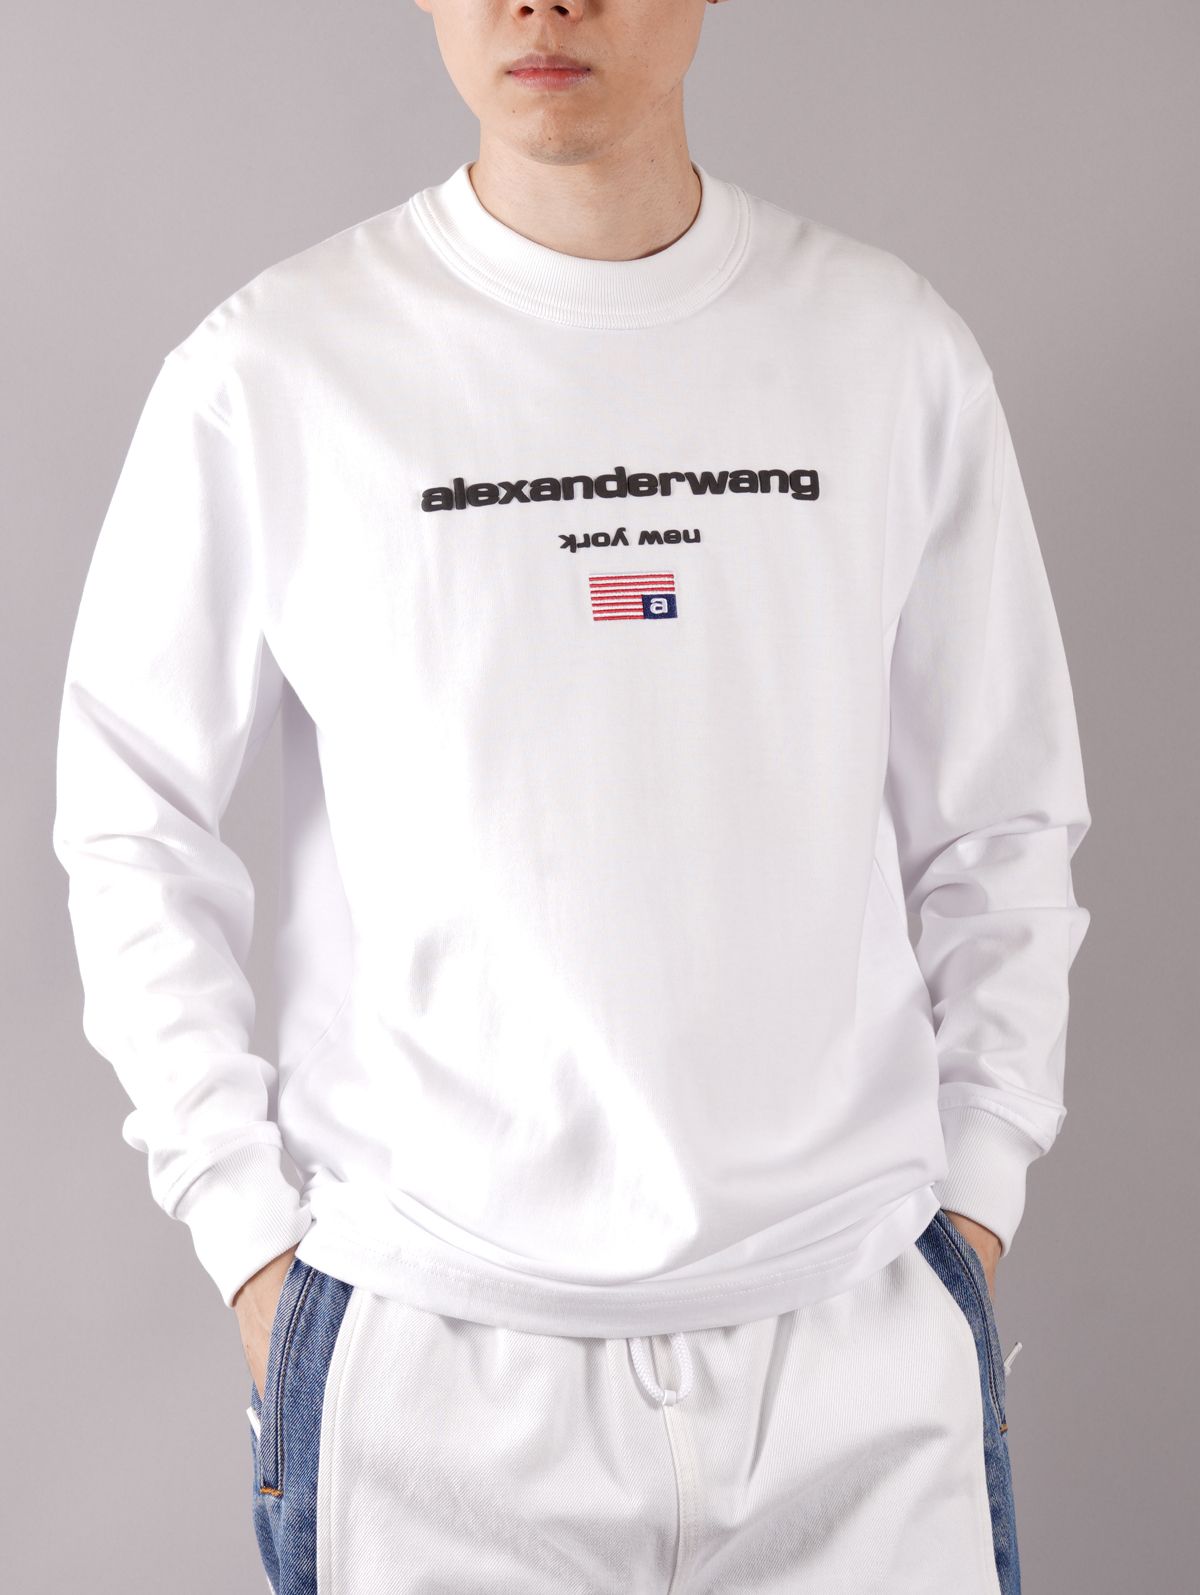 alexander wang ロンt - 通販 - gofukuyasan.com